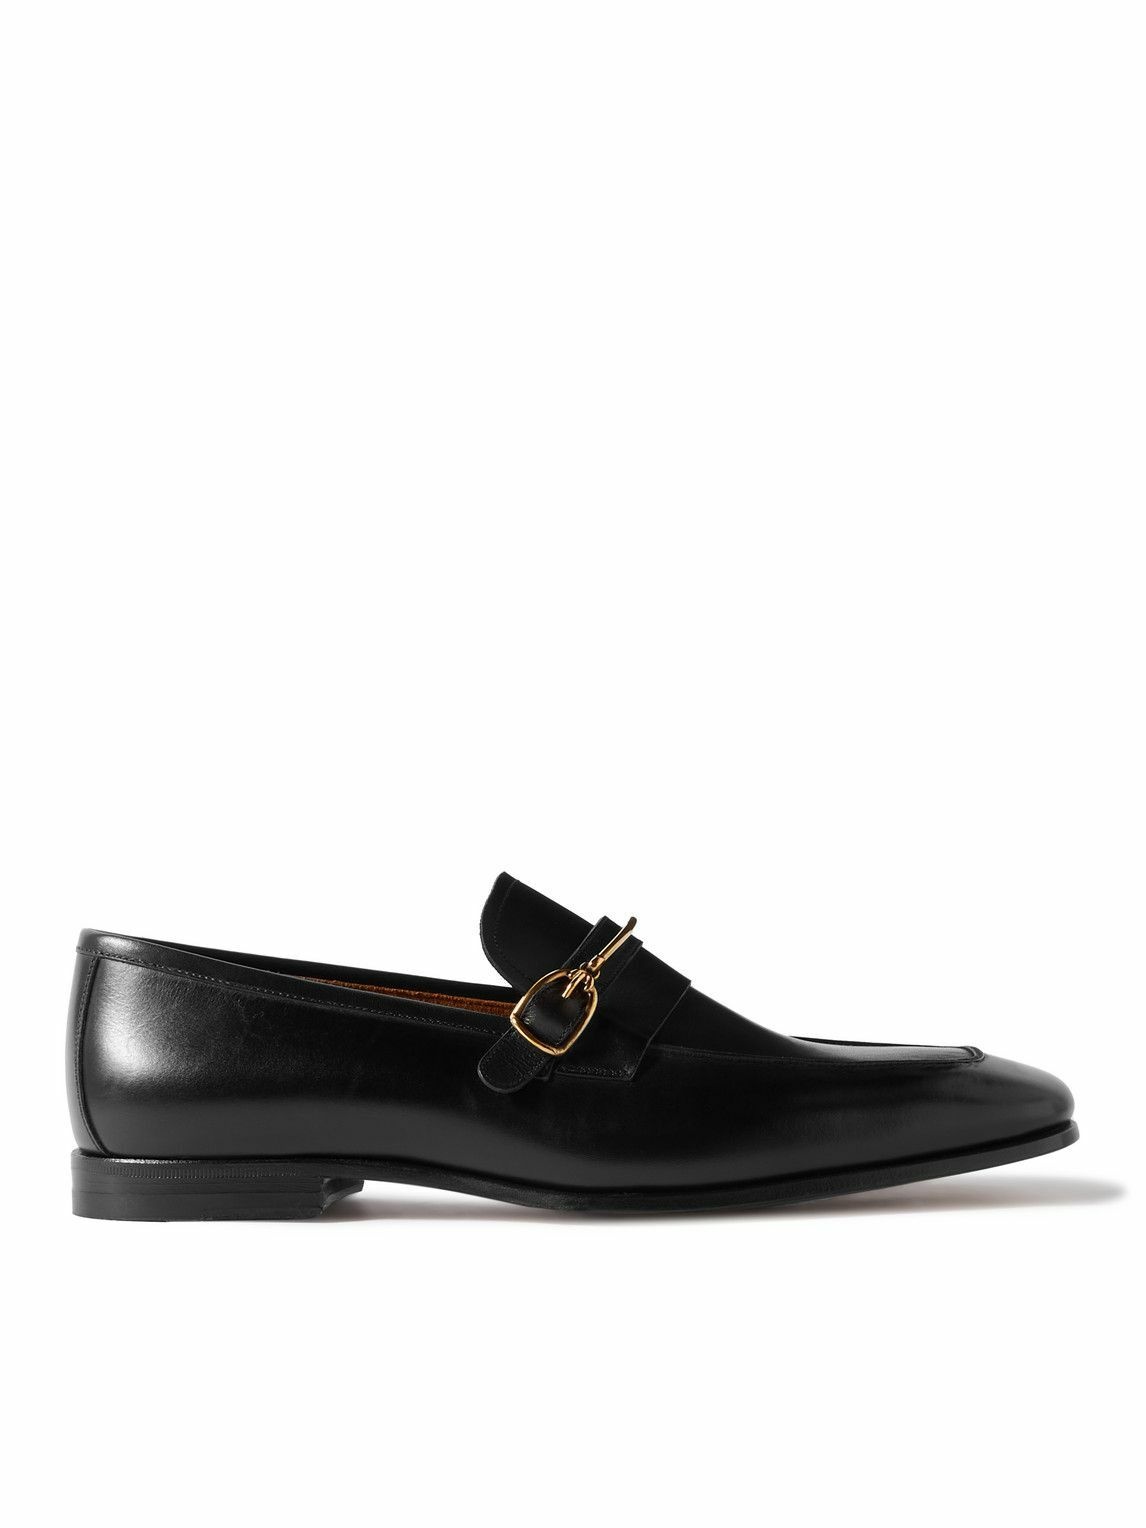 Photo: TOM FORD - Jack Embellished Patent-Leather Loafers - Black